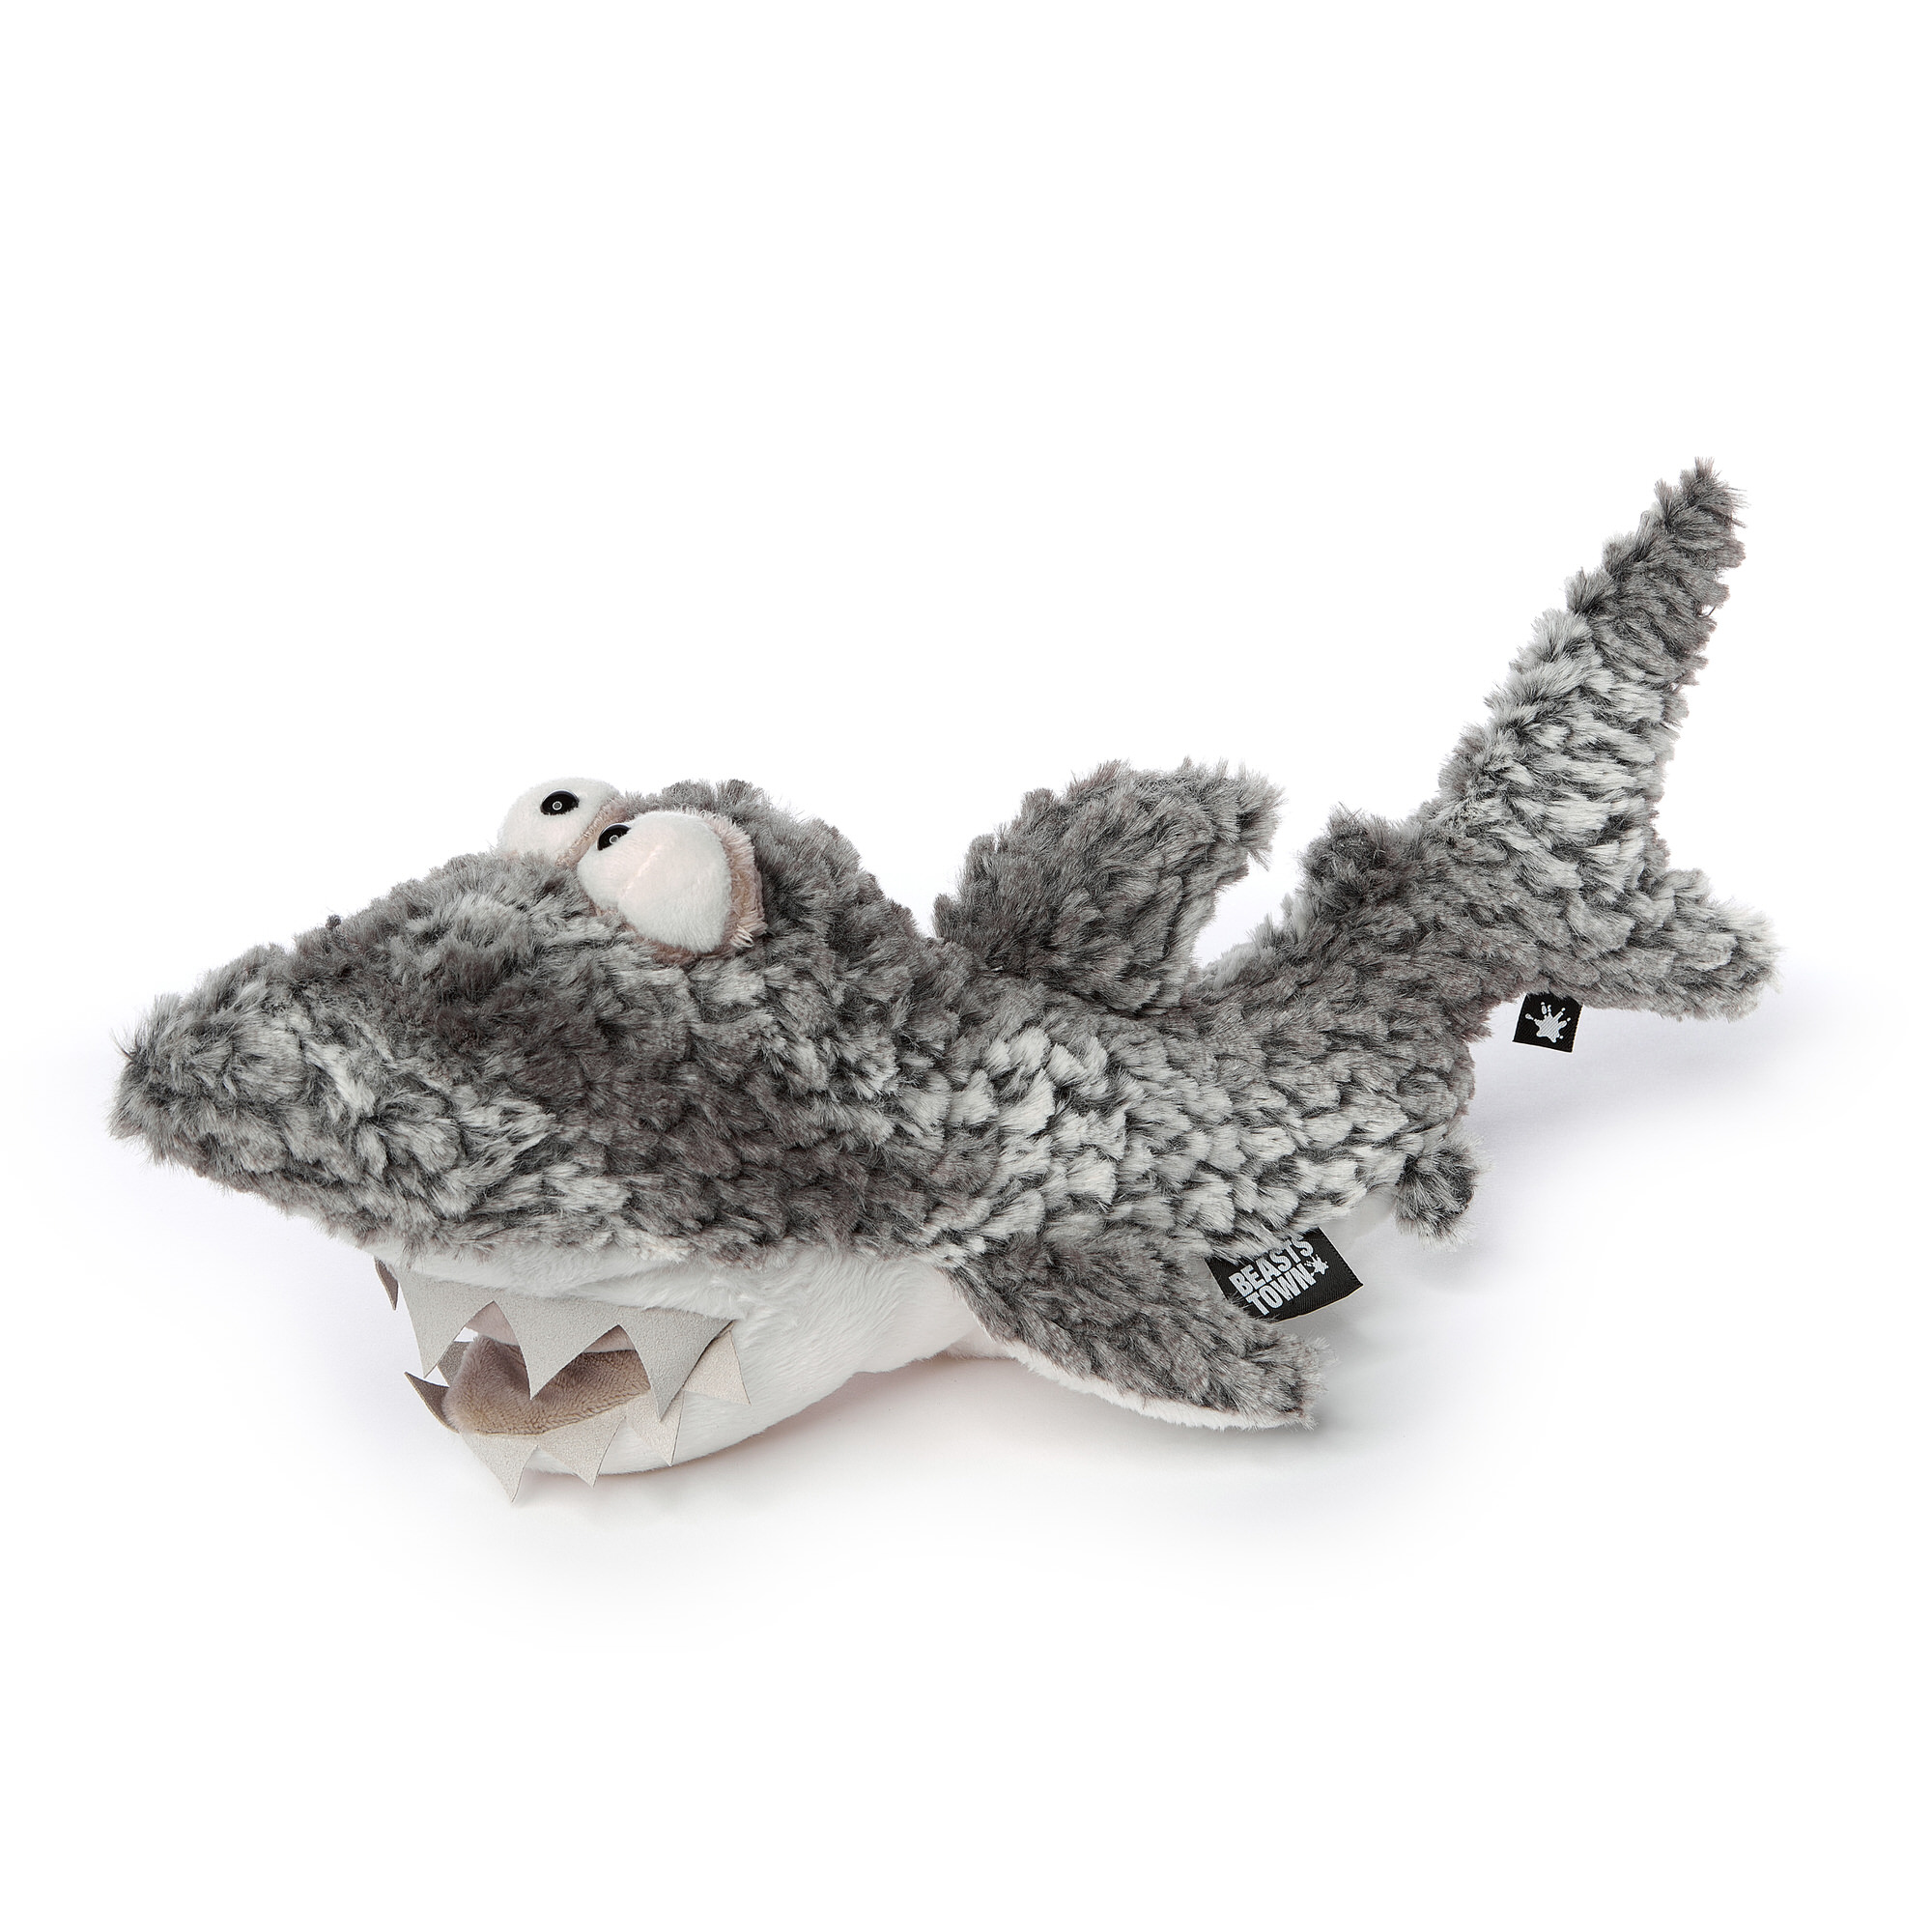 Plush toy shark Hi Bite!, Beasts collection